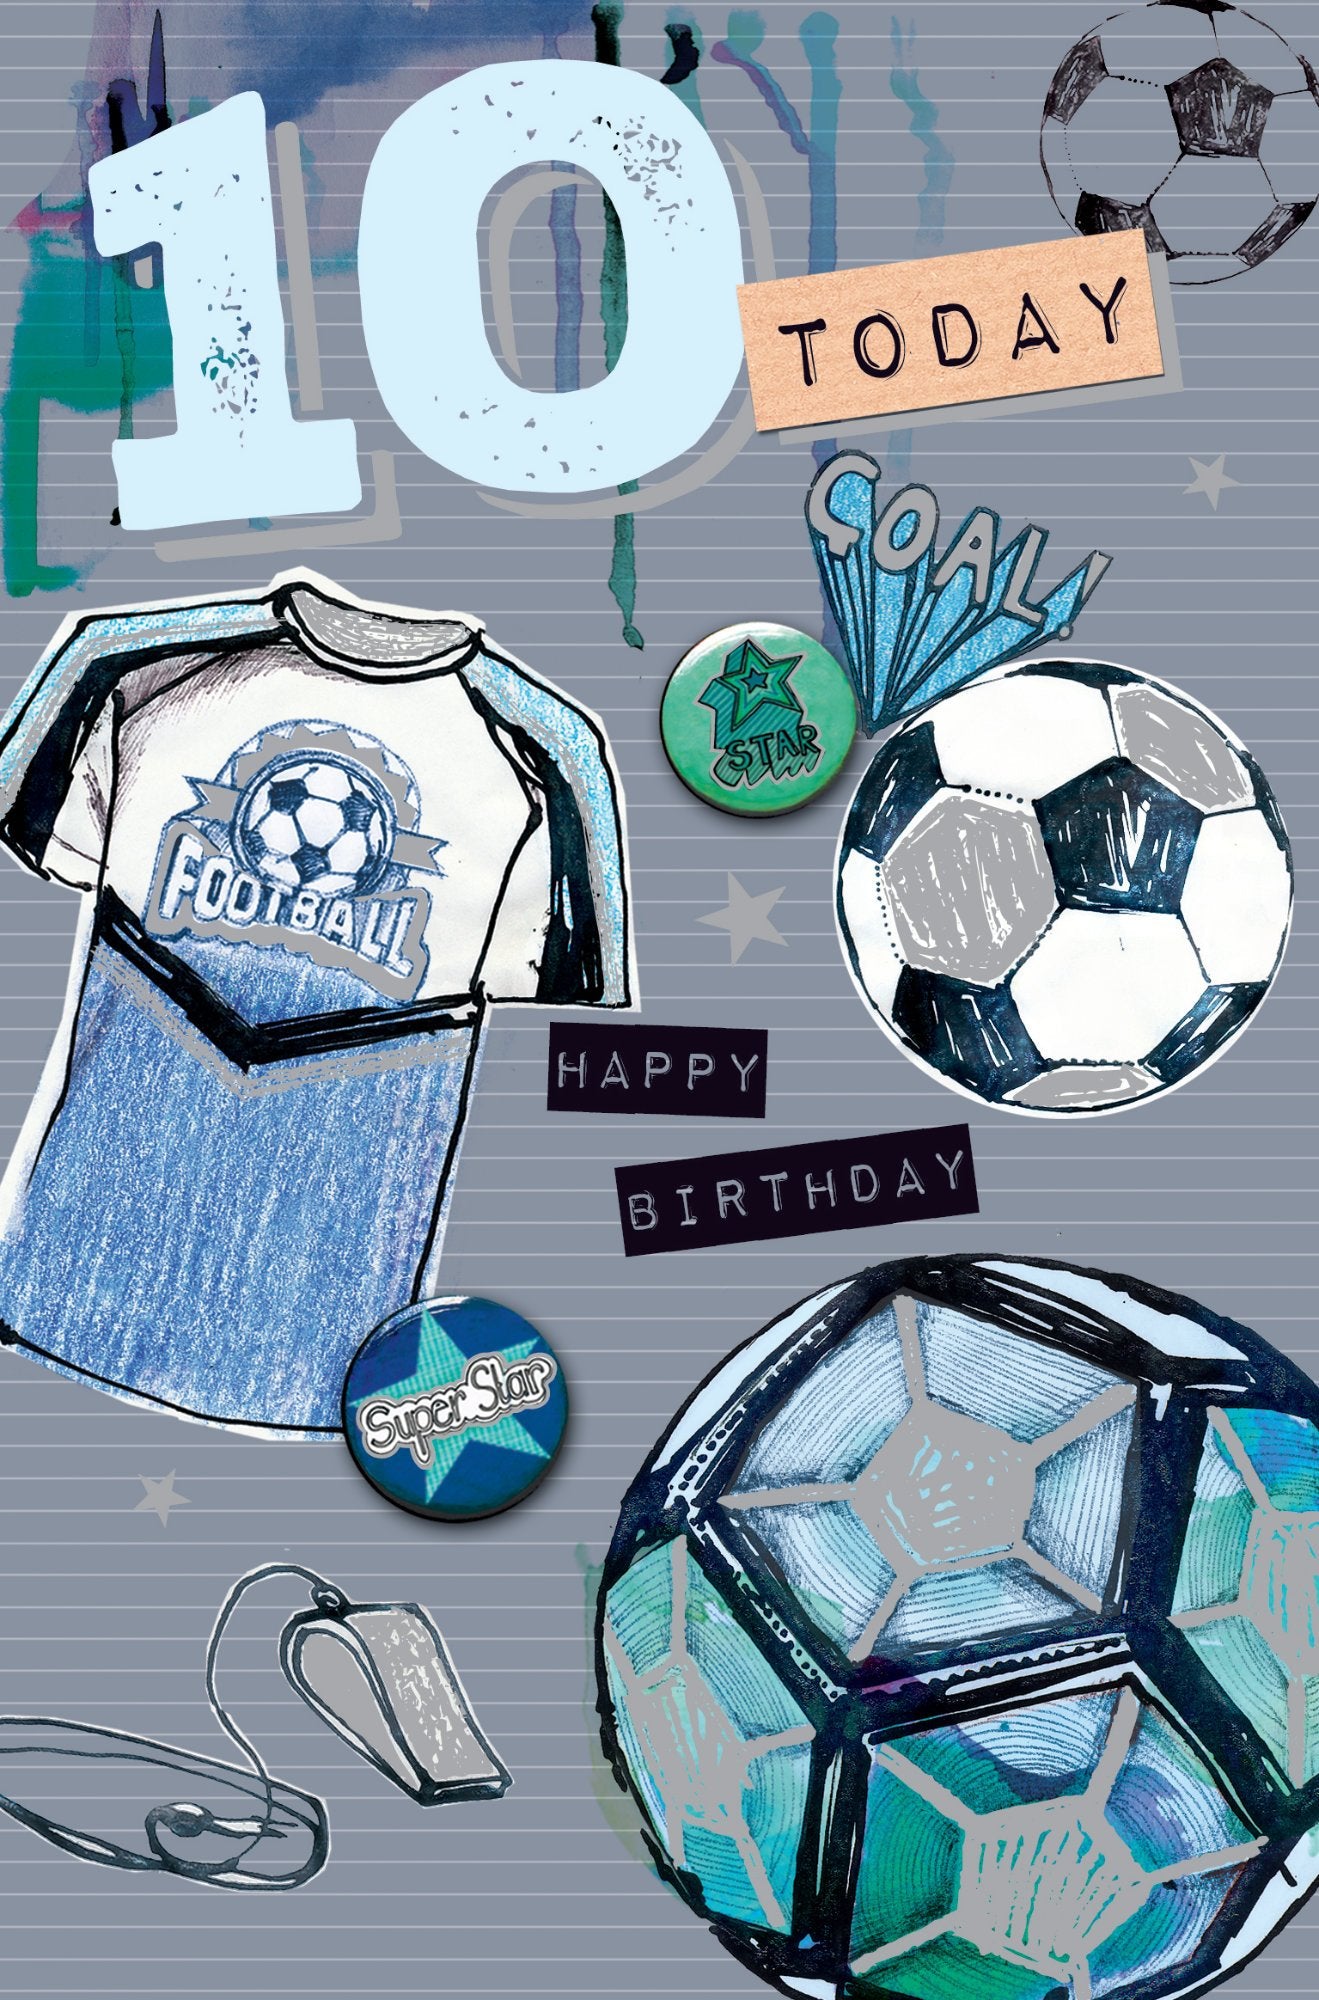 Photograph of 10th Birthday Footballs Greetings Card at Nicole's Shop